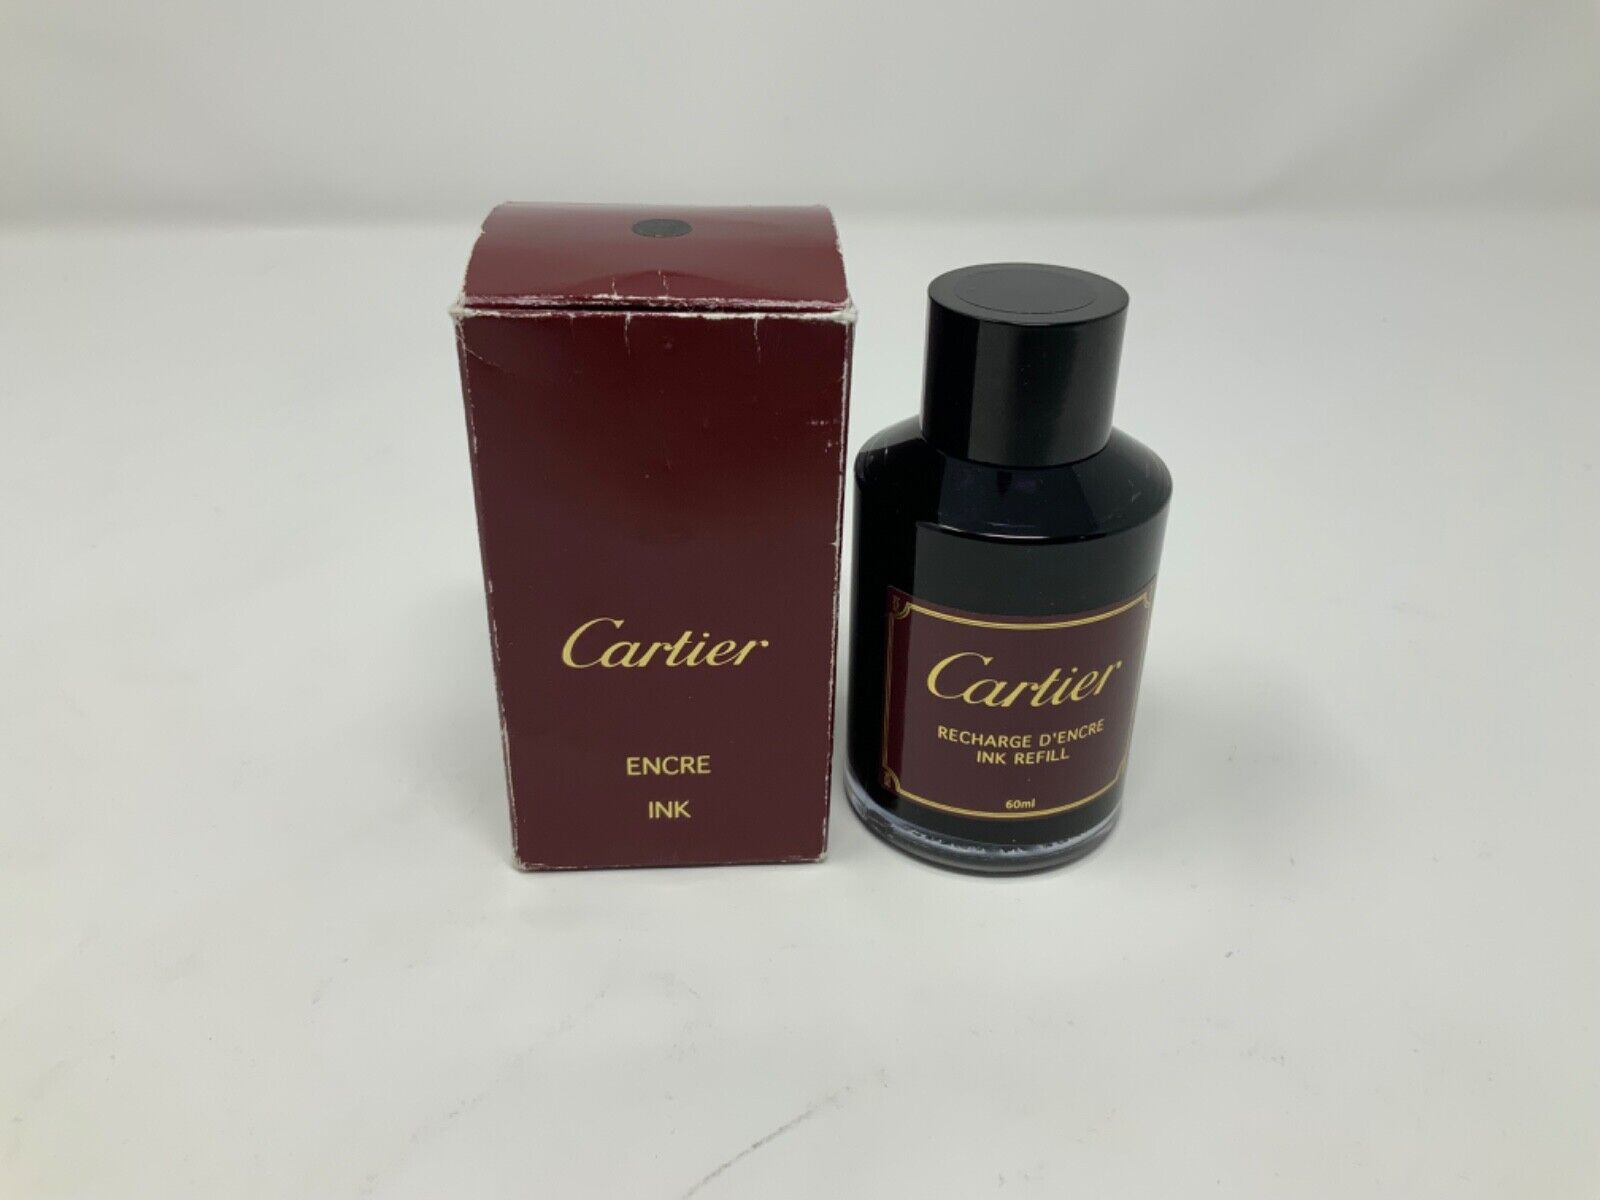 Cartier International Service Encre Ink / Inkwell Refill (60 ml)